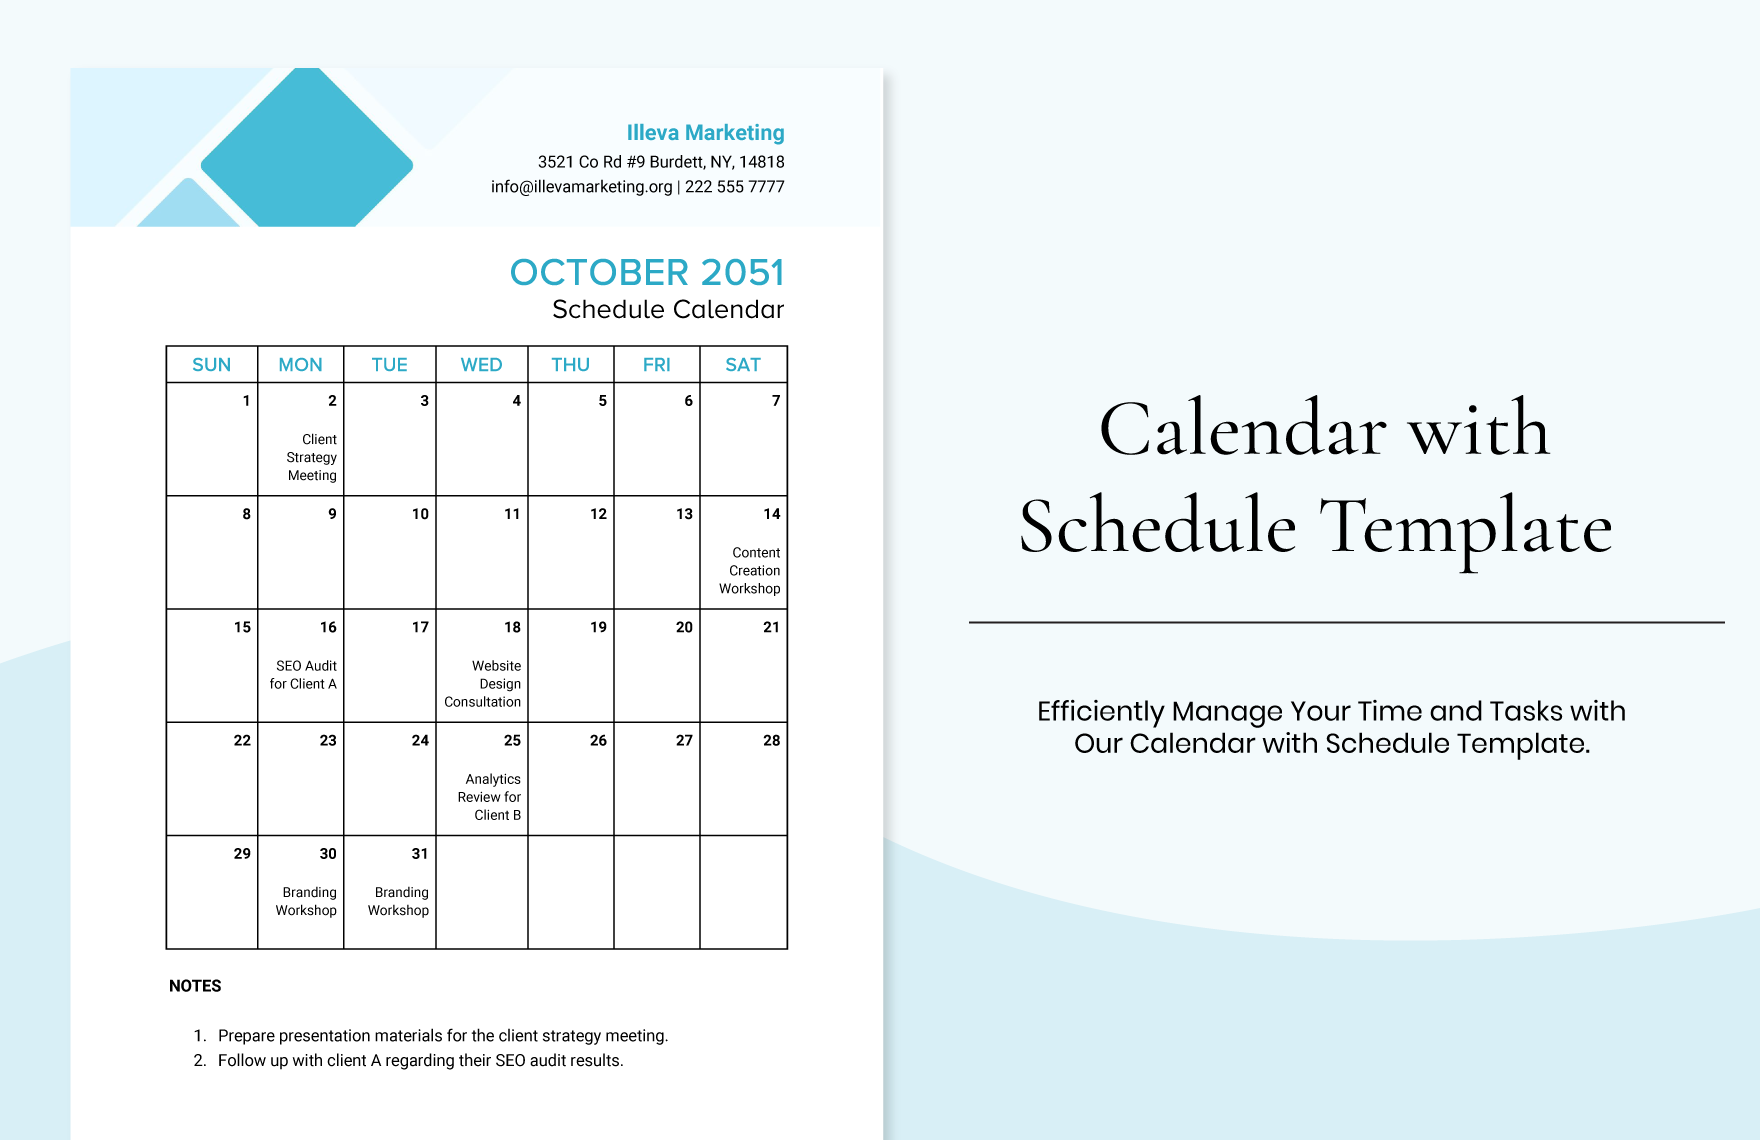 Calendar with Schedule Template 